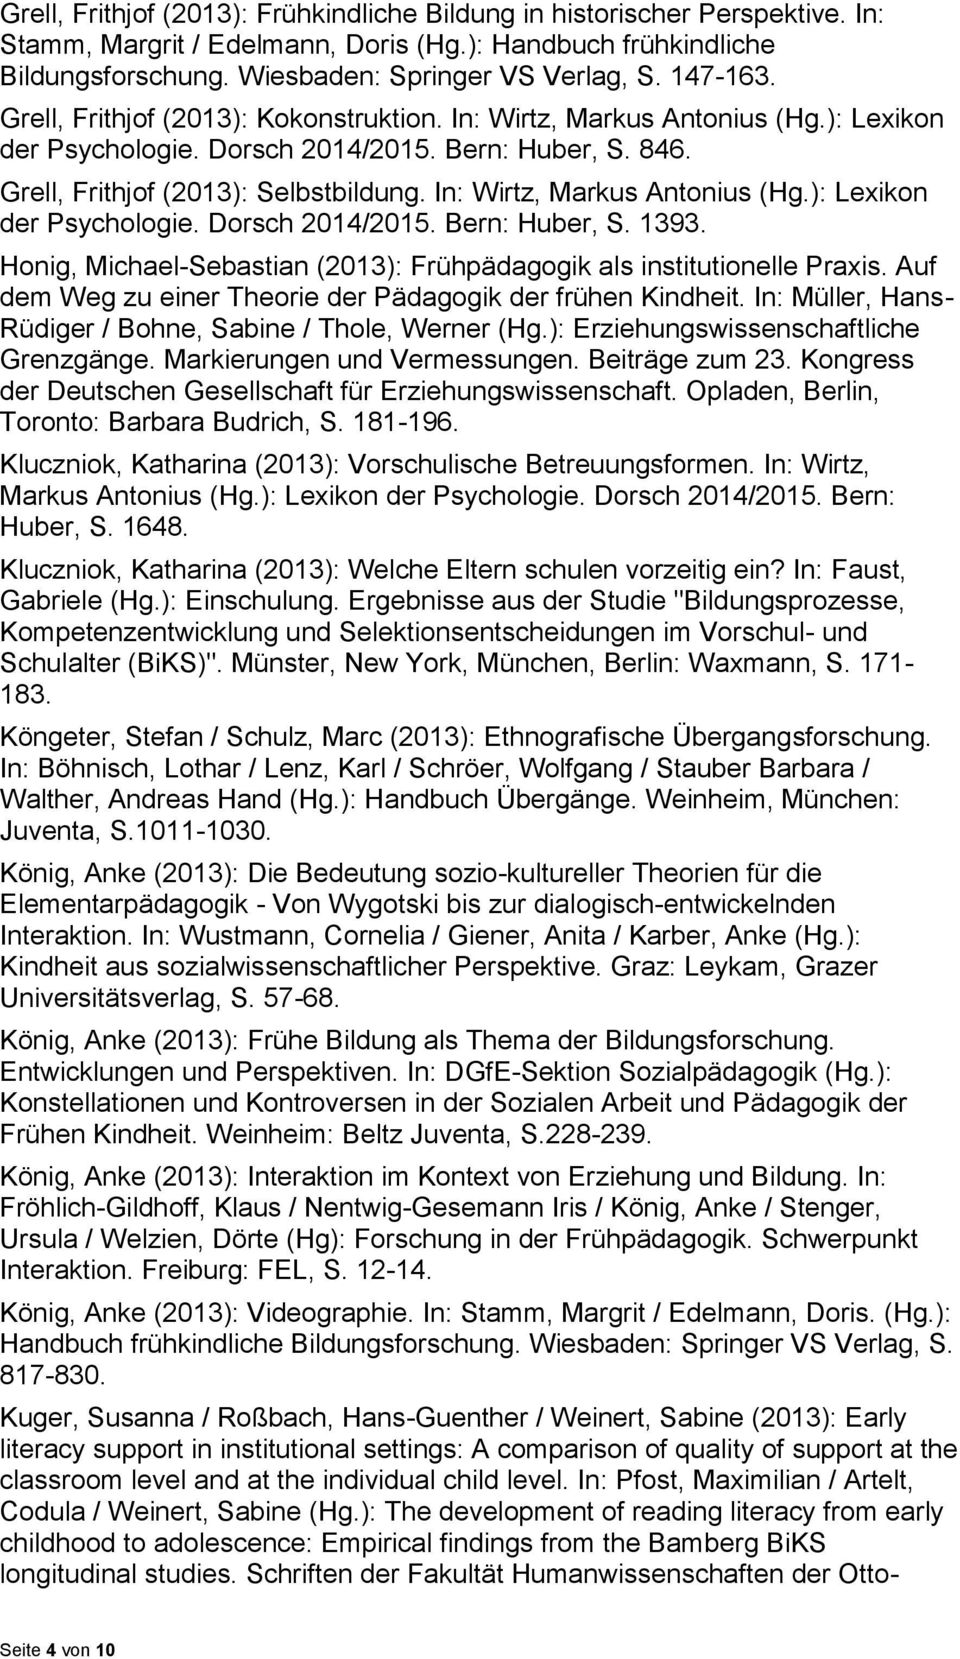 In: Wirtz, Markus Antonius (Hg.): Lexikon der Psychologie. Dorsch 2014/2015. Bern: Huber, S. 1393. Honig, Michael-Sebastian (2013): Frühpädagogik als institutionelle Praxis.